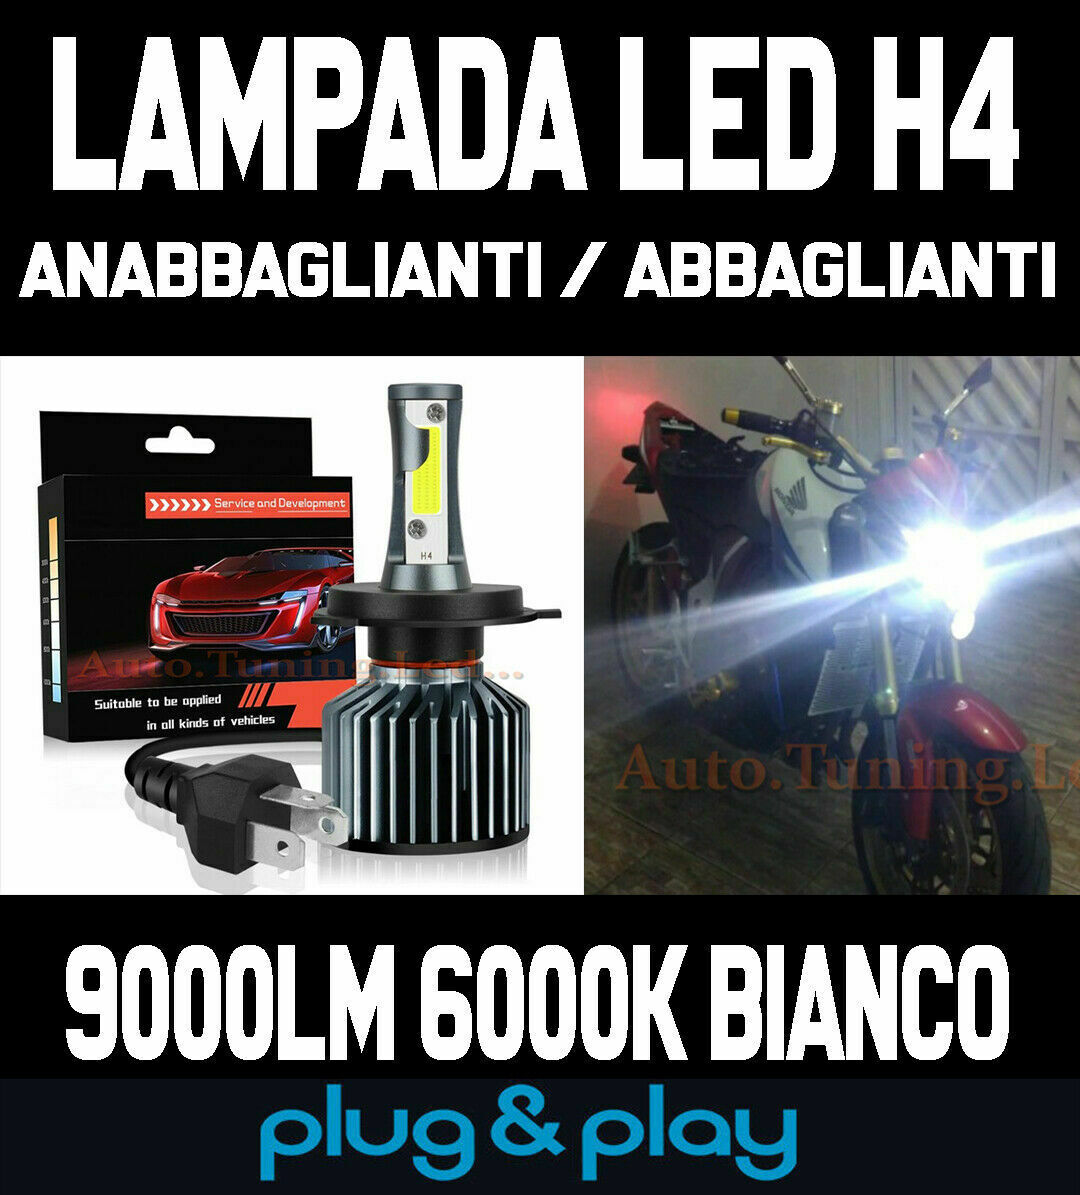 YAMAHA YZF 600 LAMPADA LED H4 6000K CANBUS 9000LM ANABBAGLIANTI ABBAGLIANTI